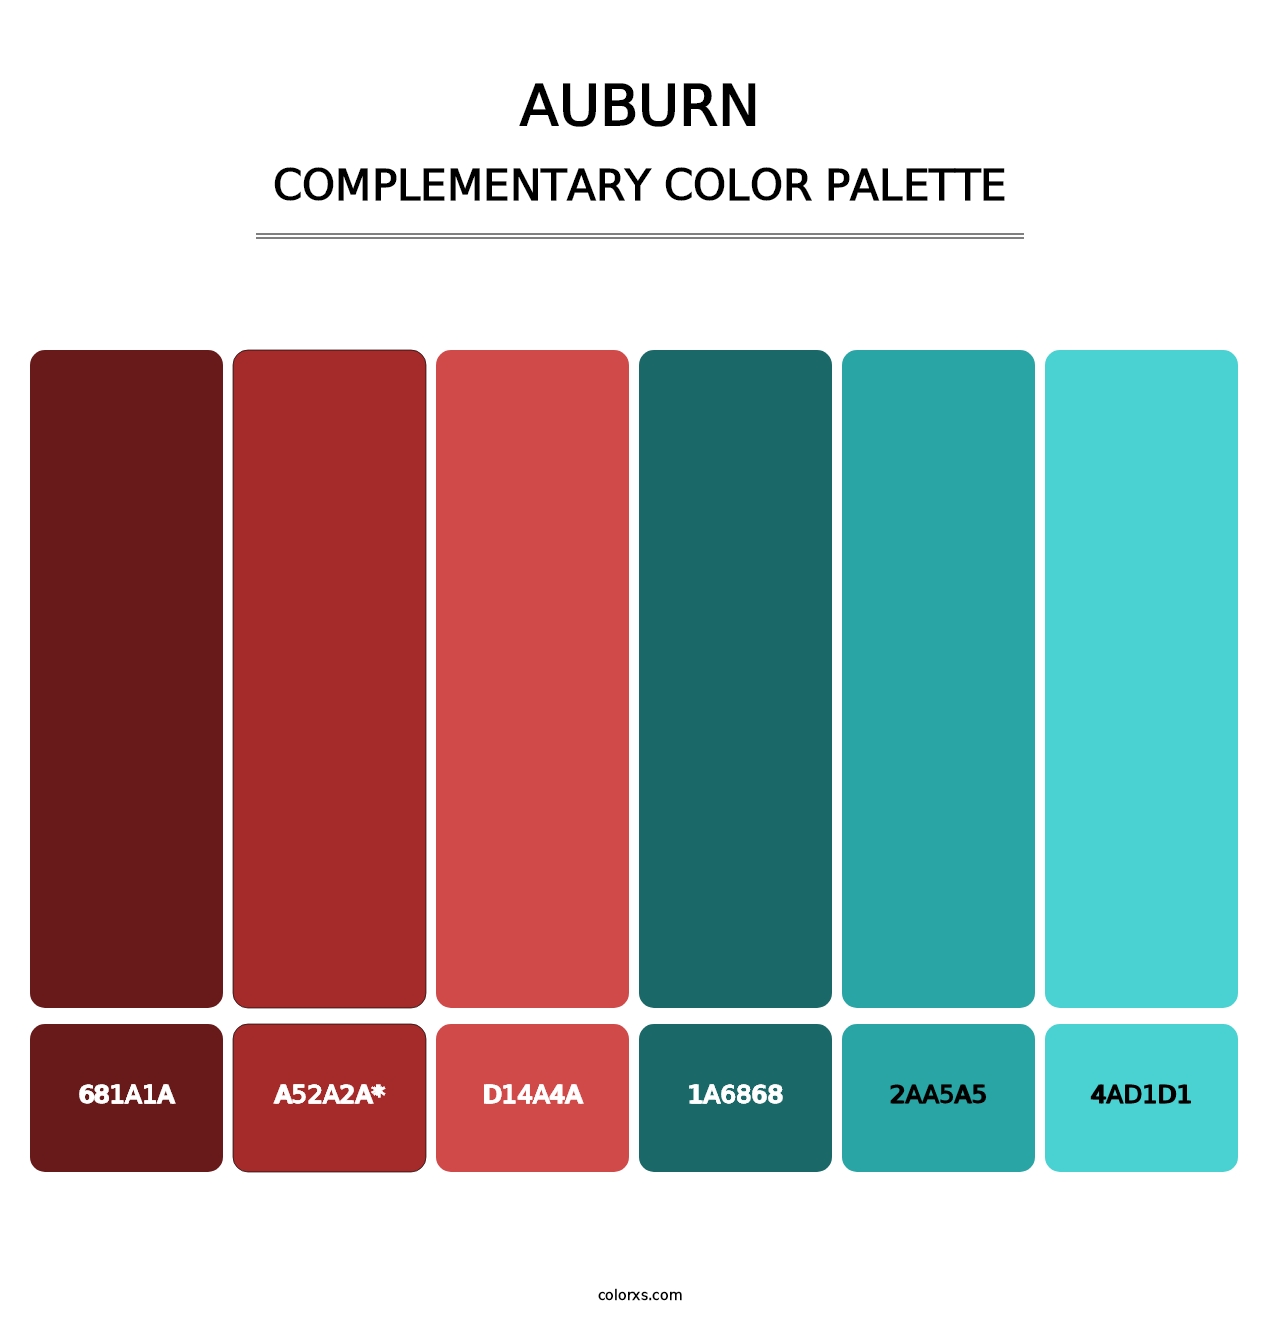 Auburn - Complementary Color Palette